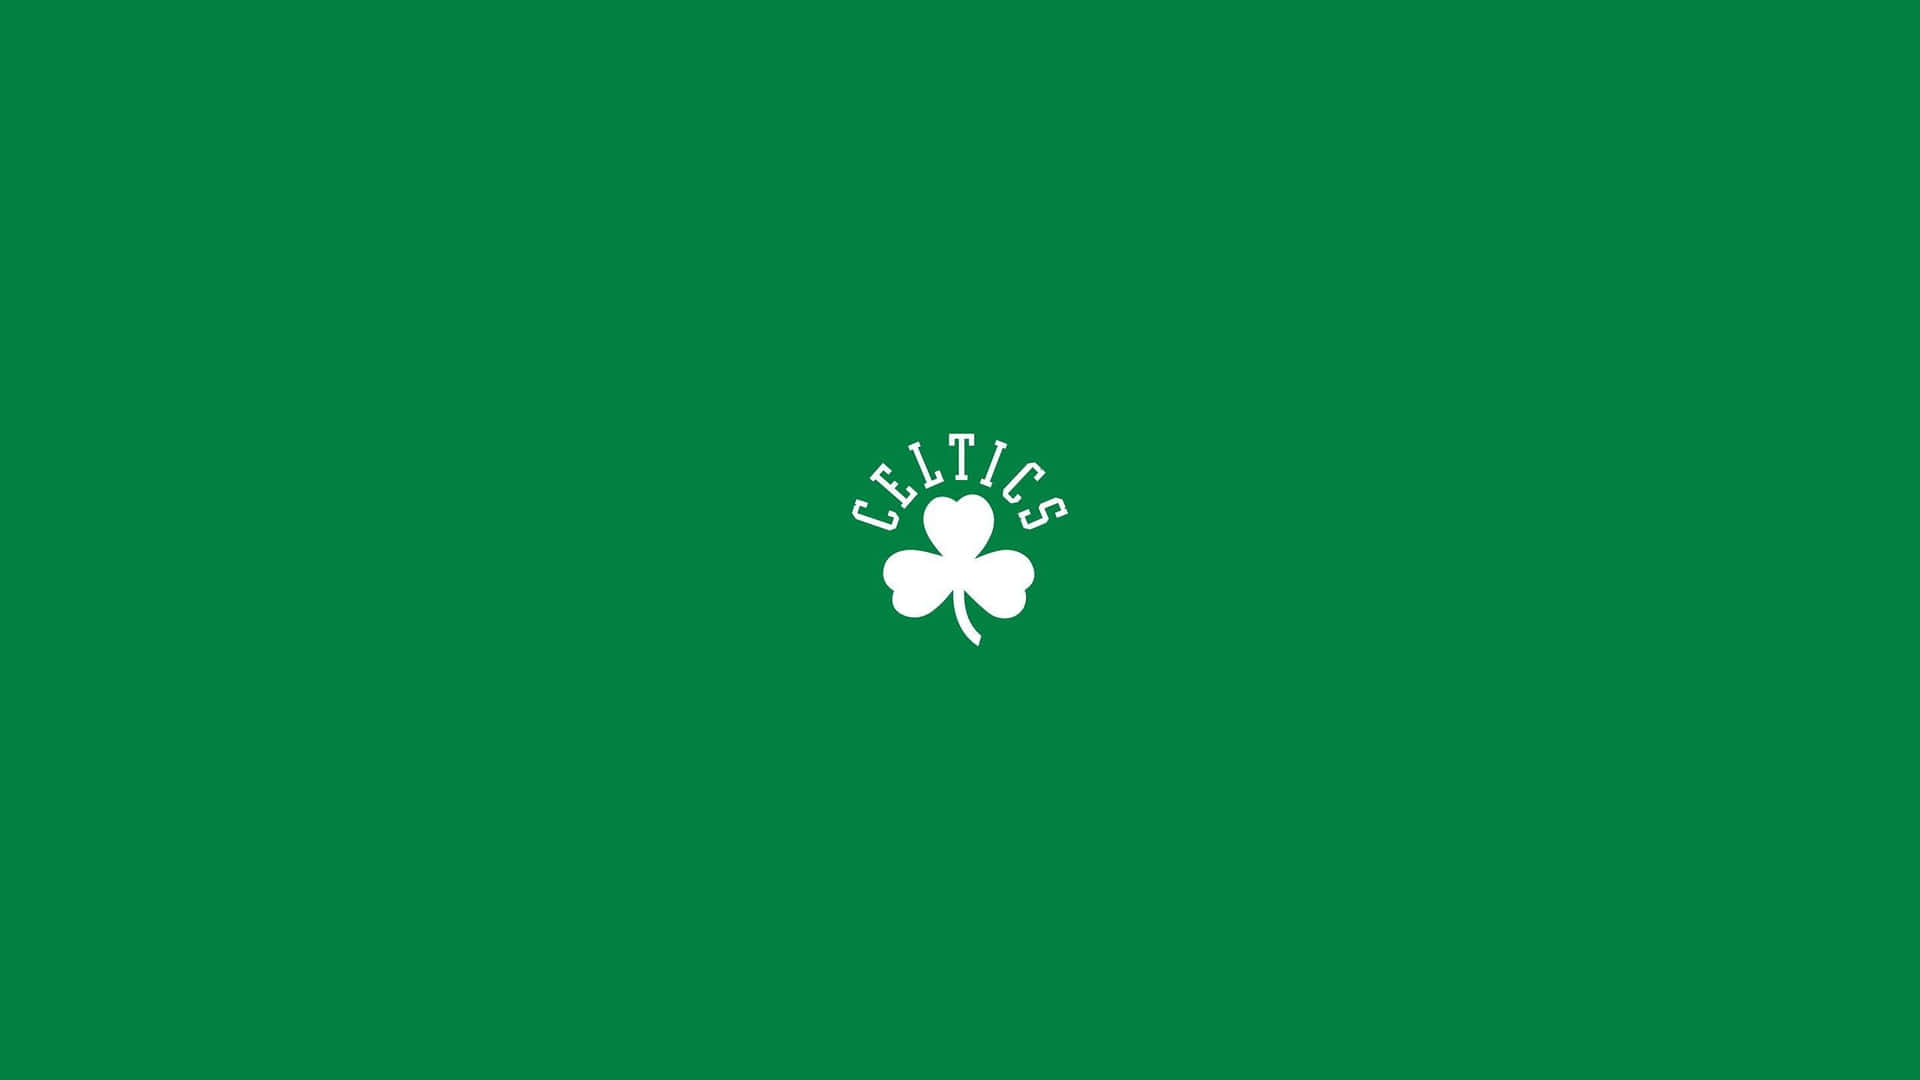 Bostonceltics Logo - Boston Celtics Logotyp. Wallpaper